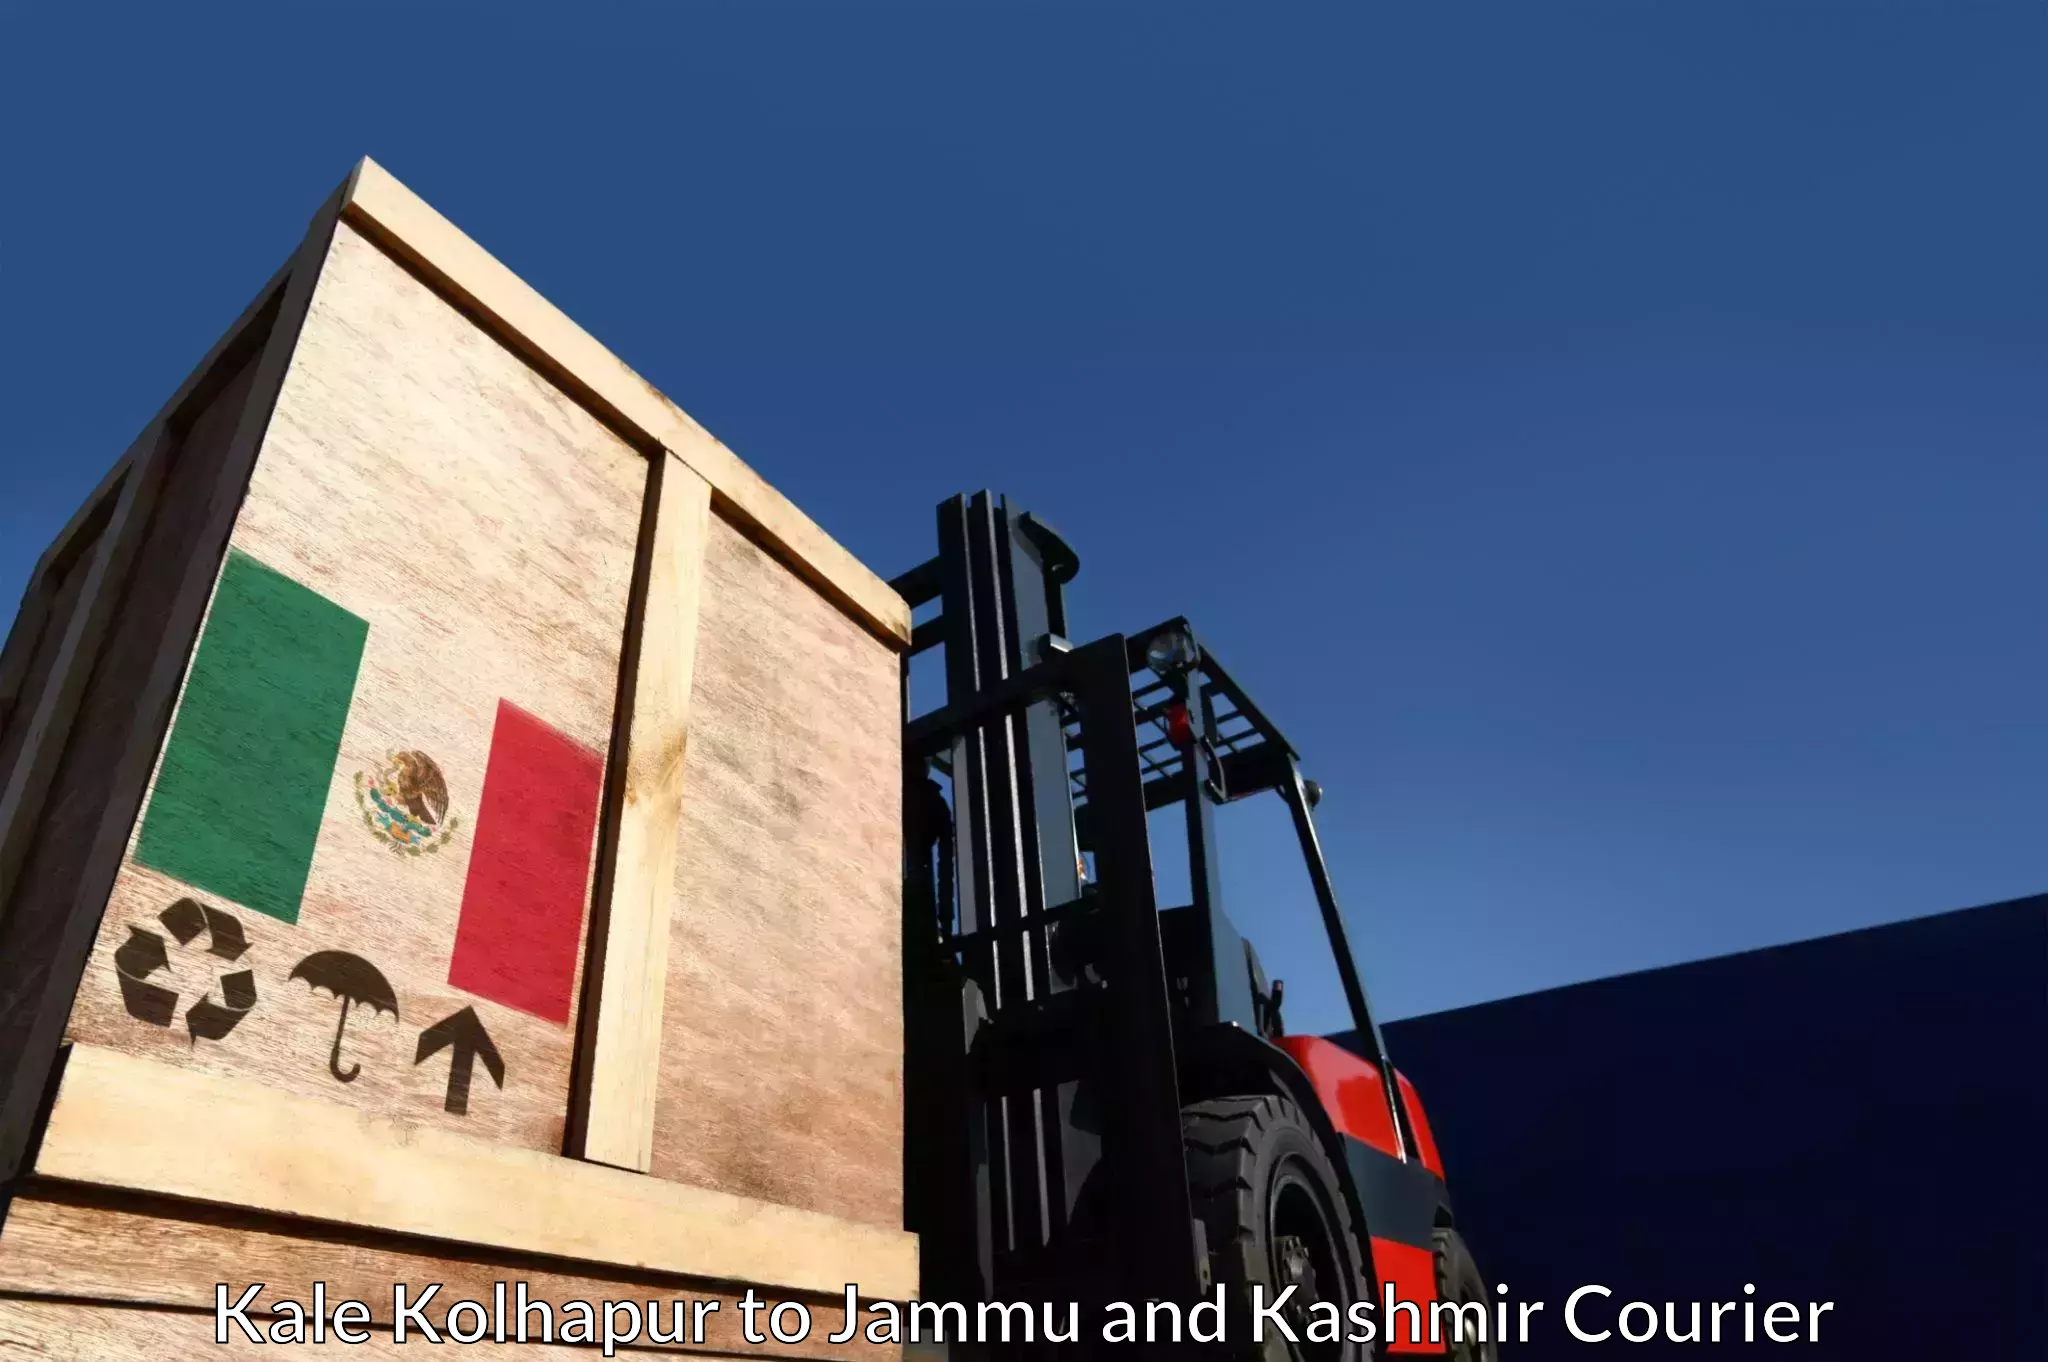 Courier app Kale Kolhapur to Srinagar Kashmir